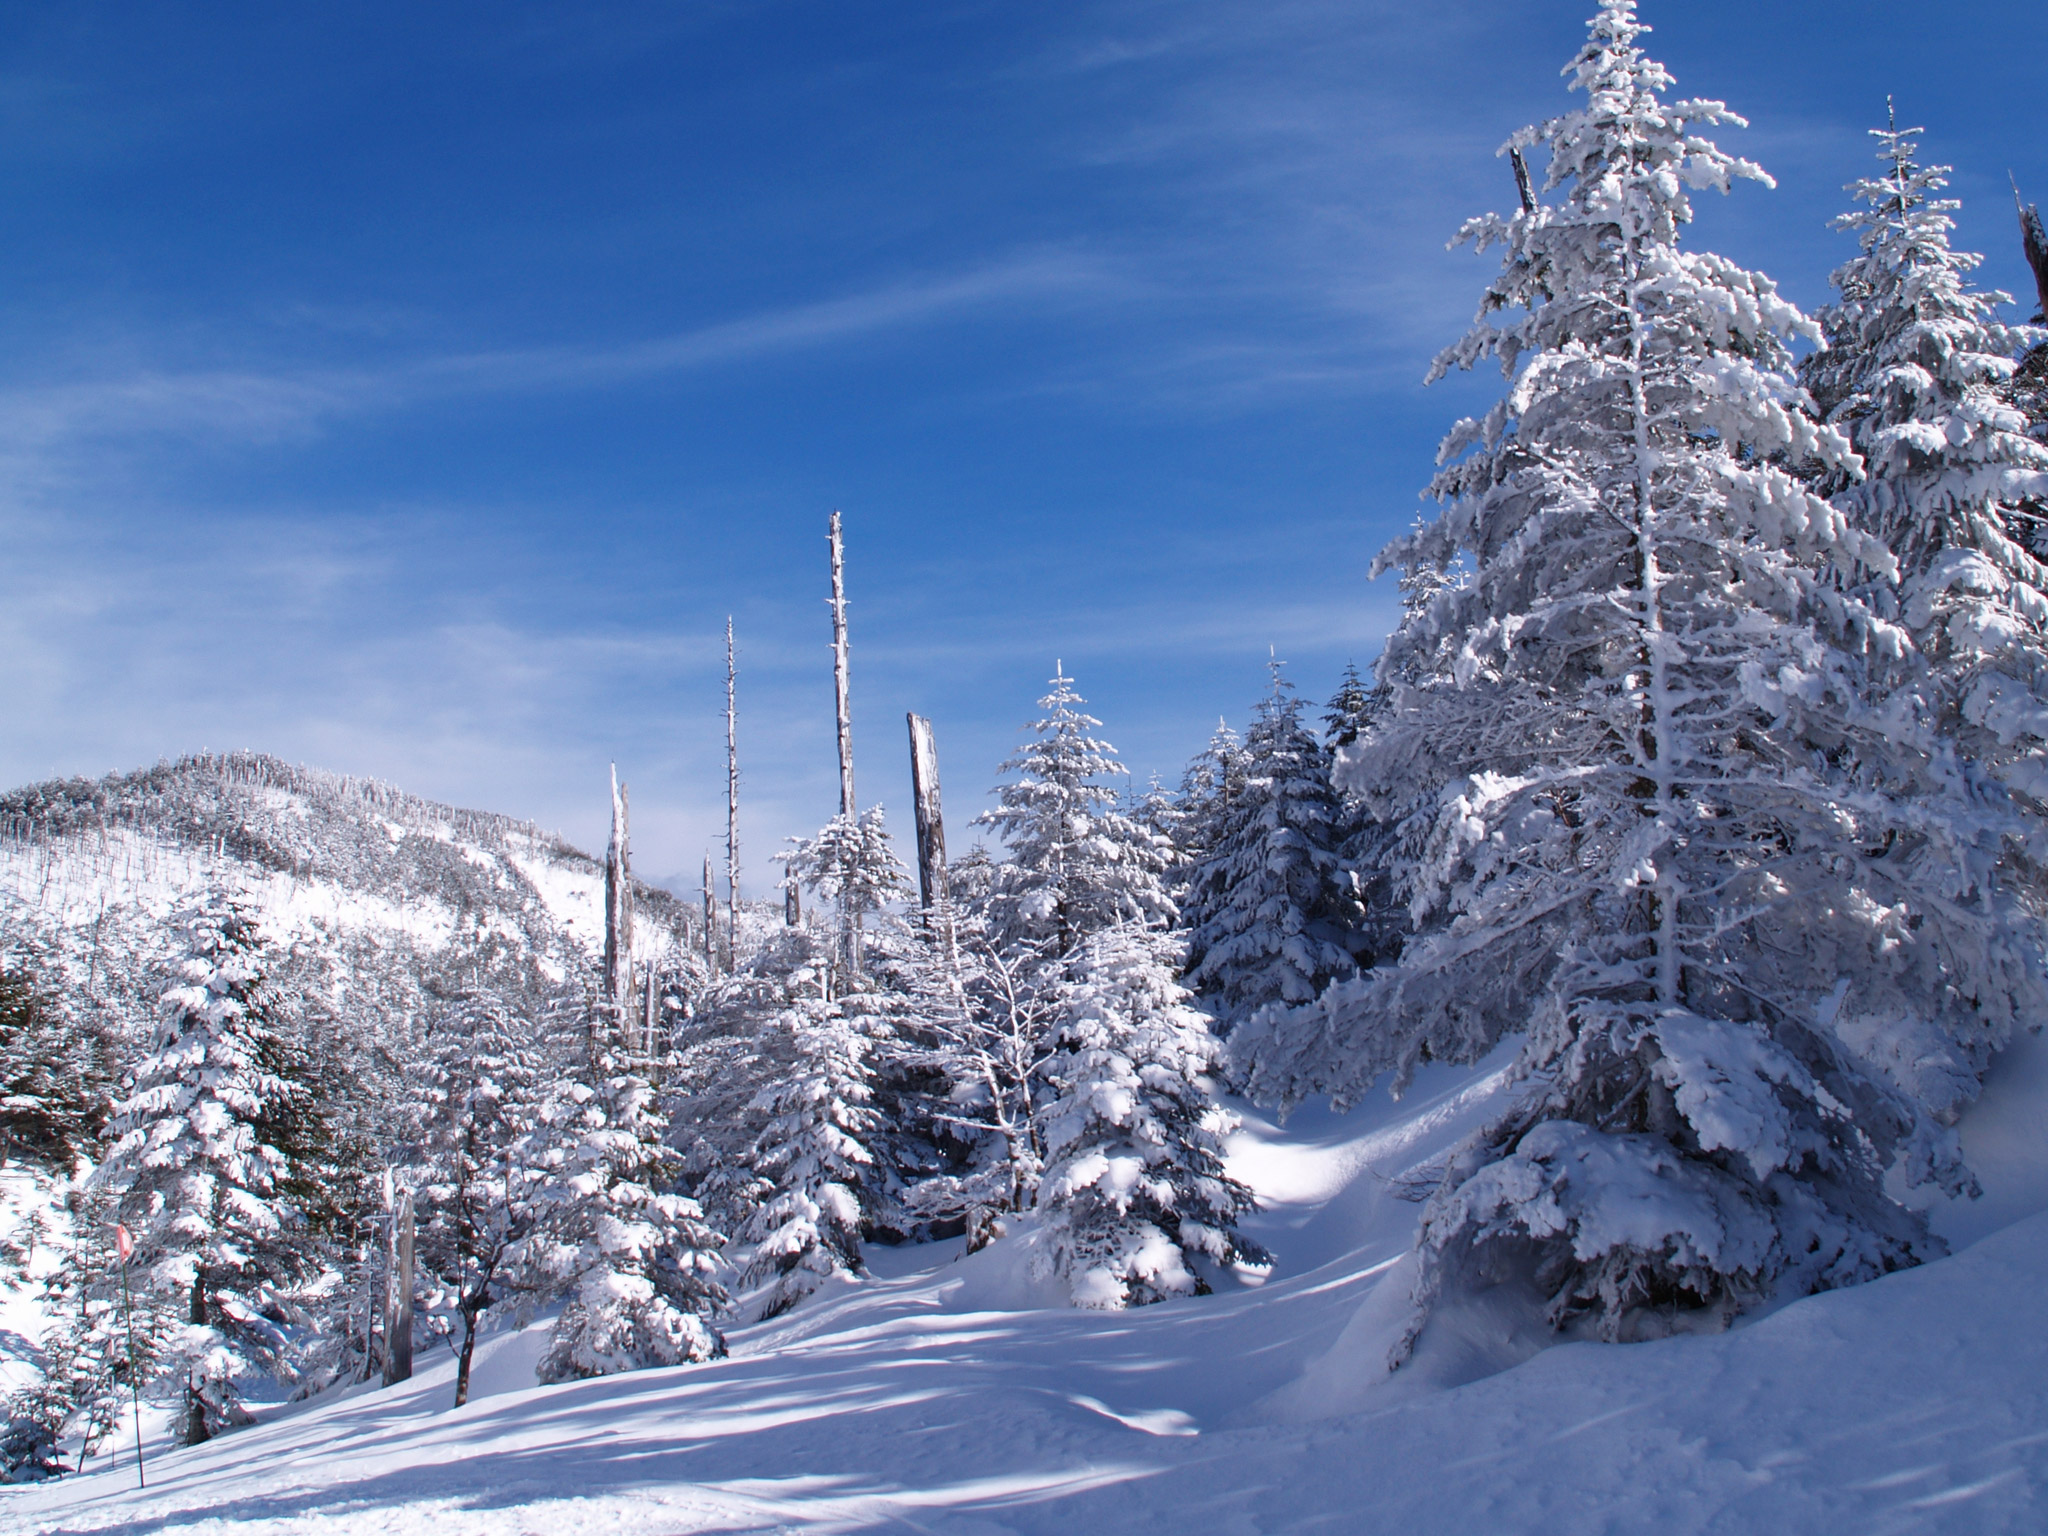 四季 冬の無料壁紙 冬の風景写真 高解像度 高画質